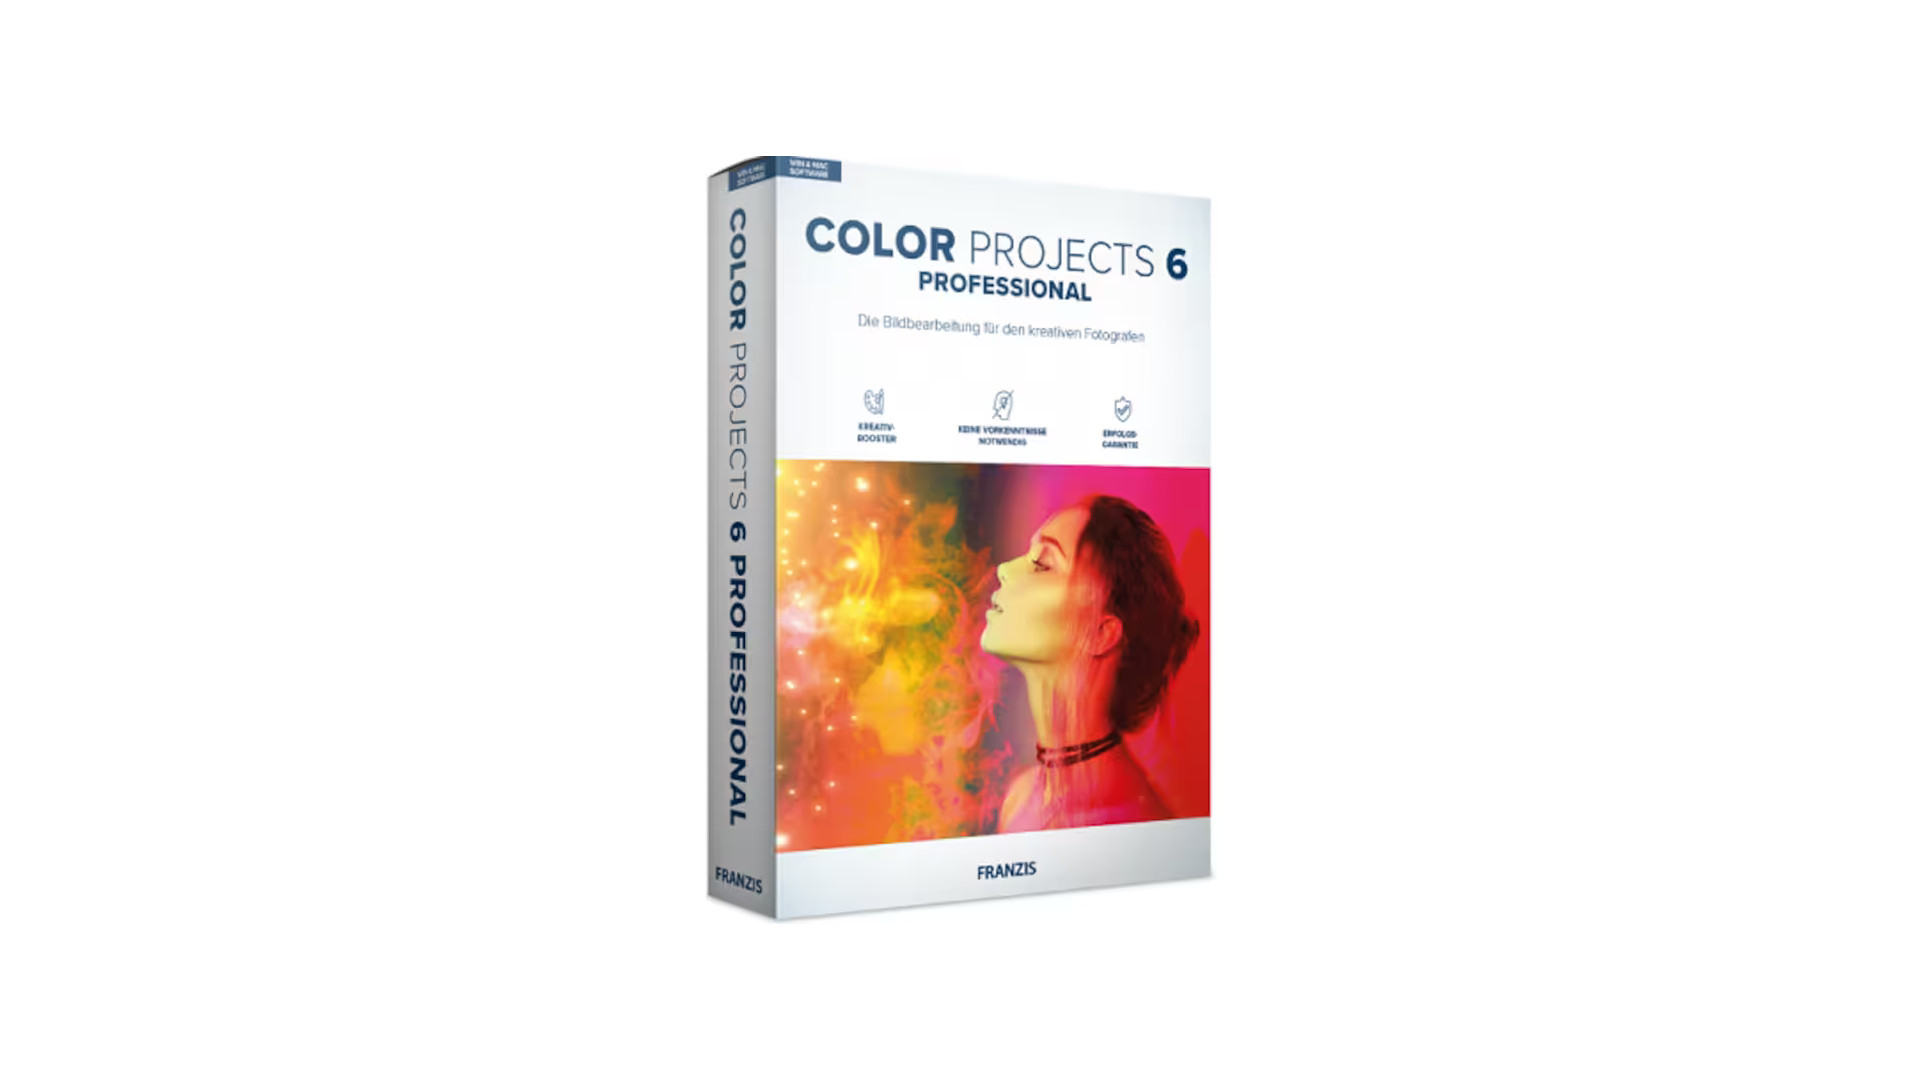 COLOR projects 6 Pro - Project Software Key (Lifetime / 1 PC) 33.89$